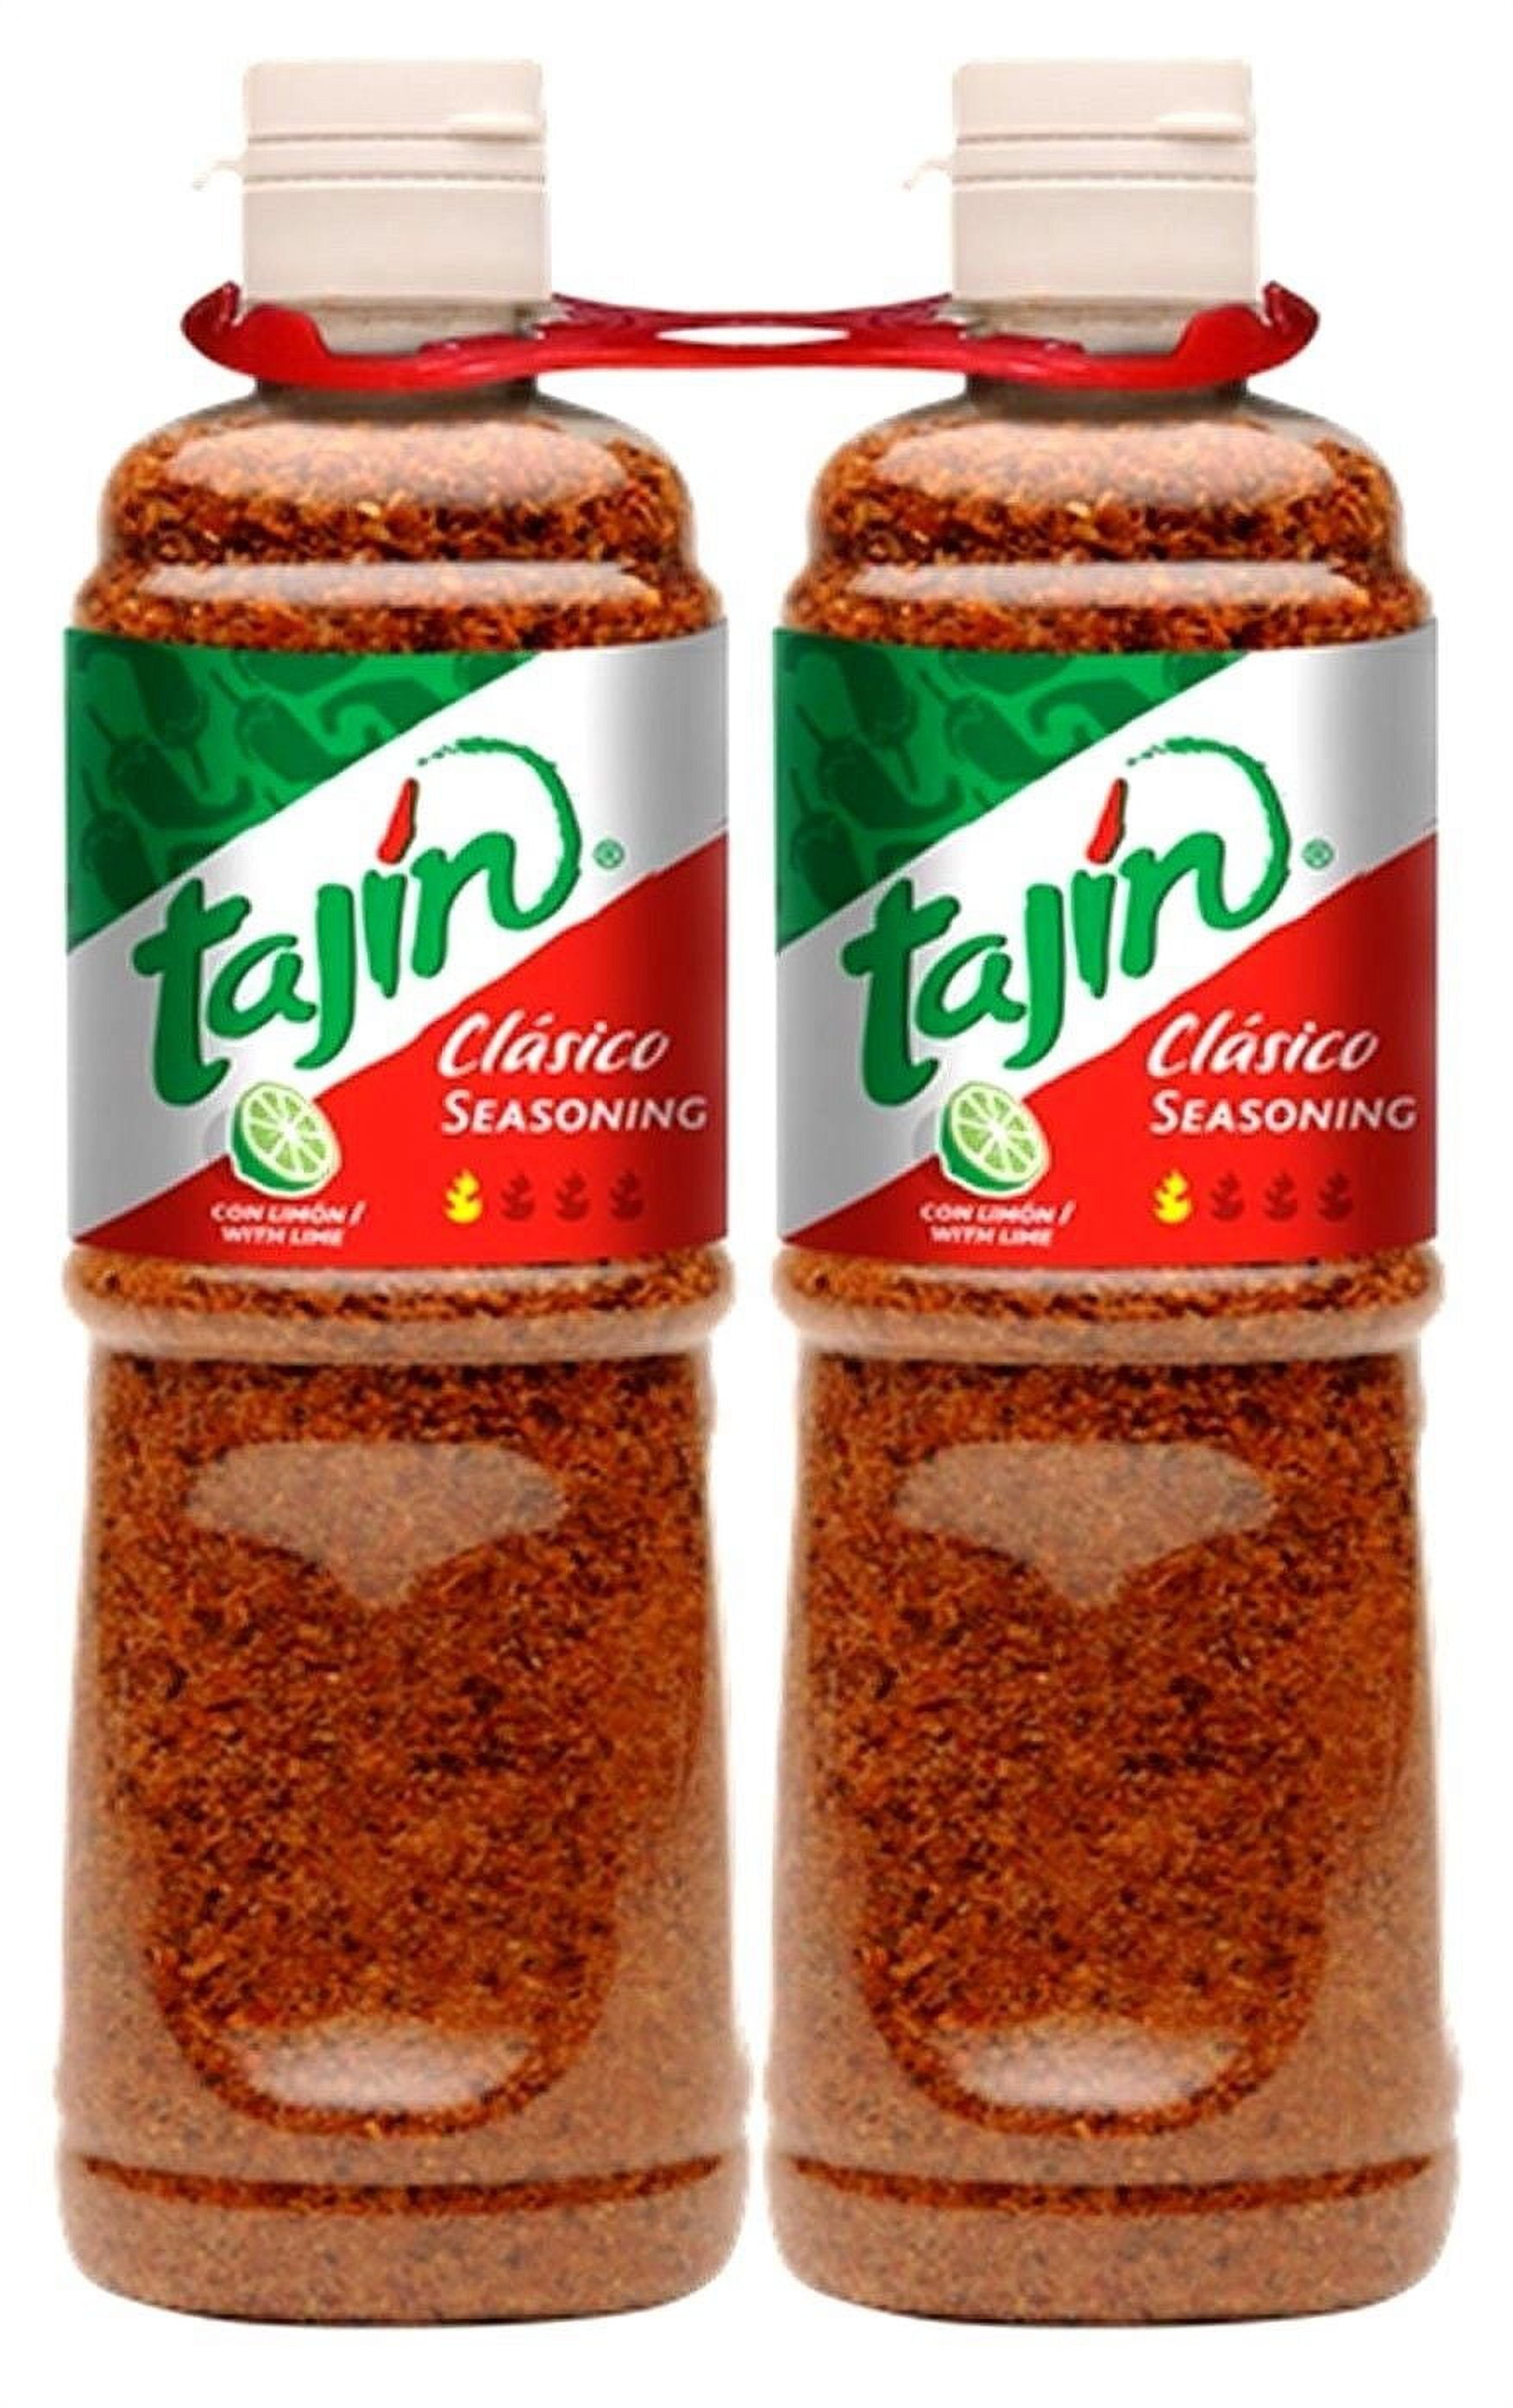 Dan-O's Seasoning Large 2 Bottle Combo | Original & Spicy | 2 Pack (20 oz)